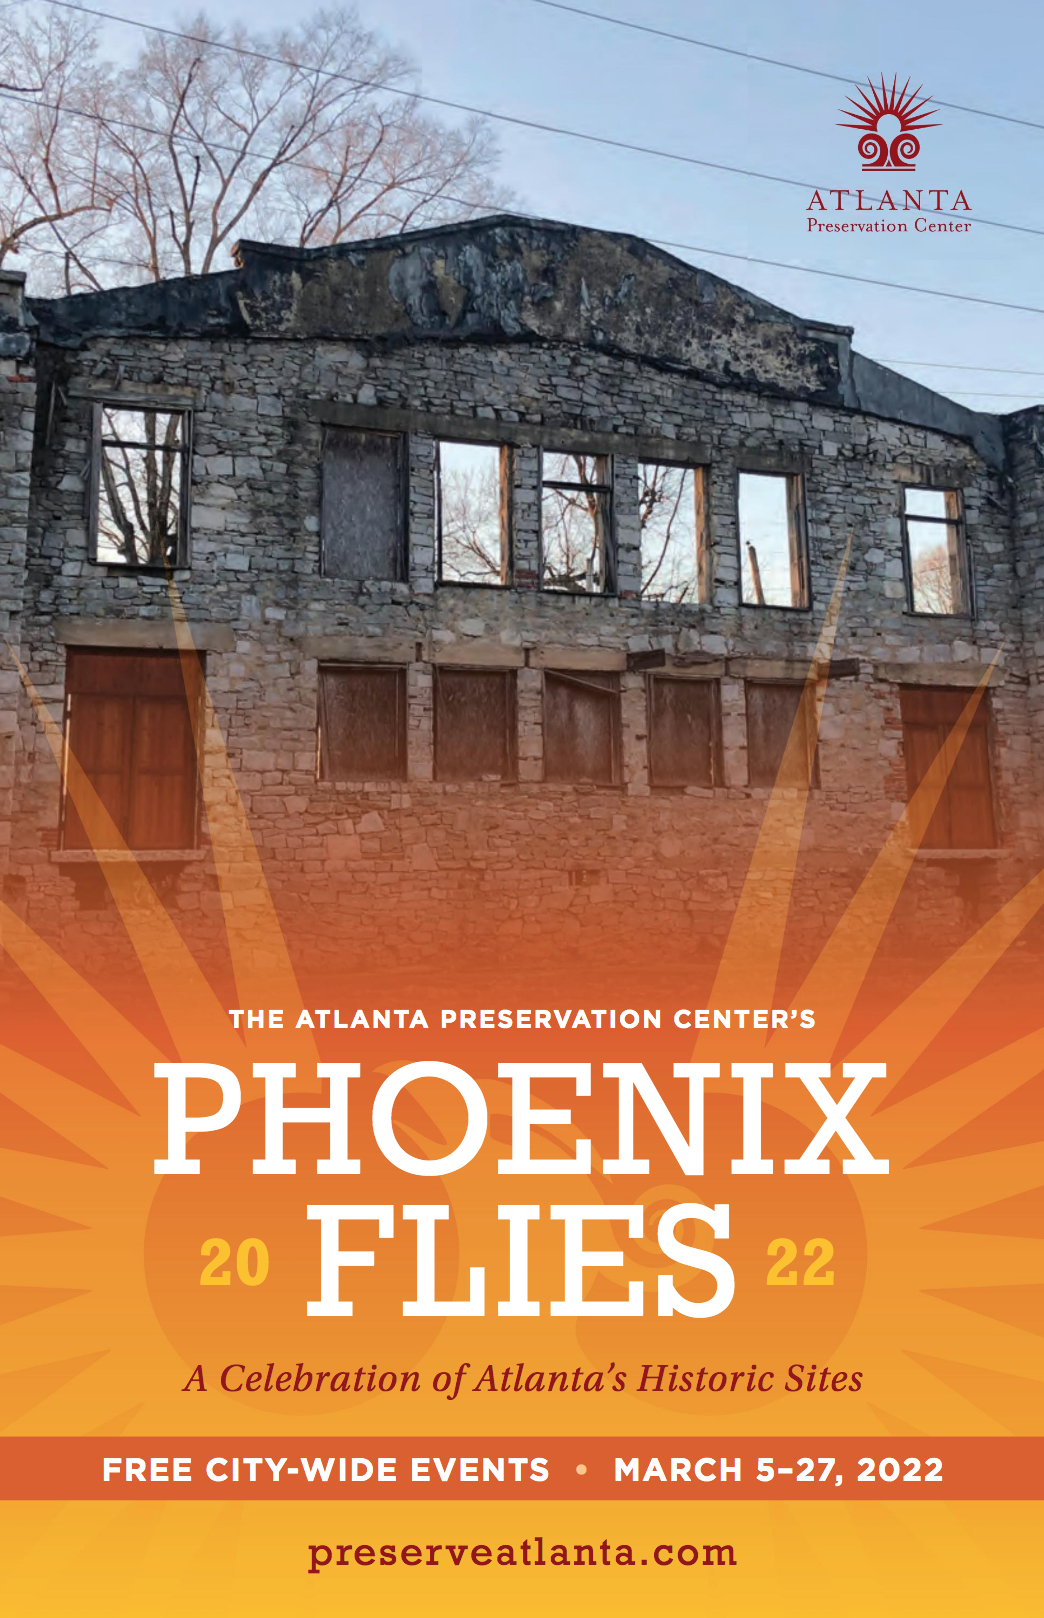 The 2022 Phoenix Flies A Celebration of Atlanta’s Historic Sites